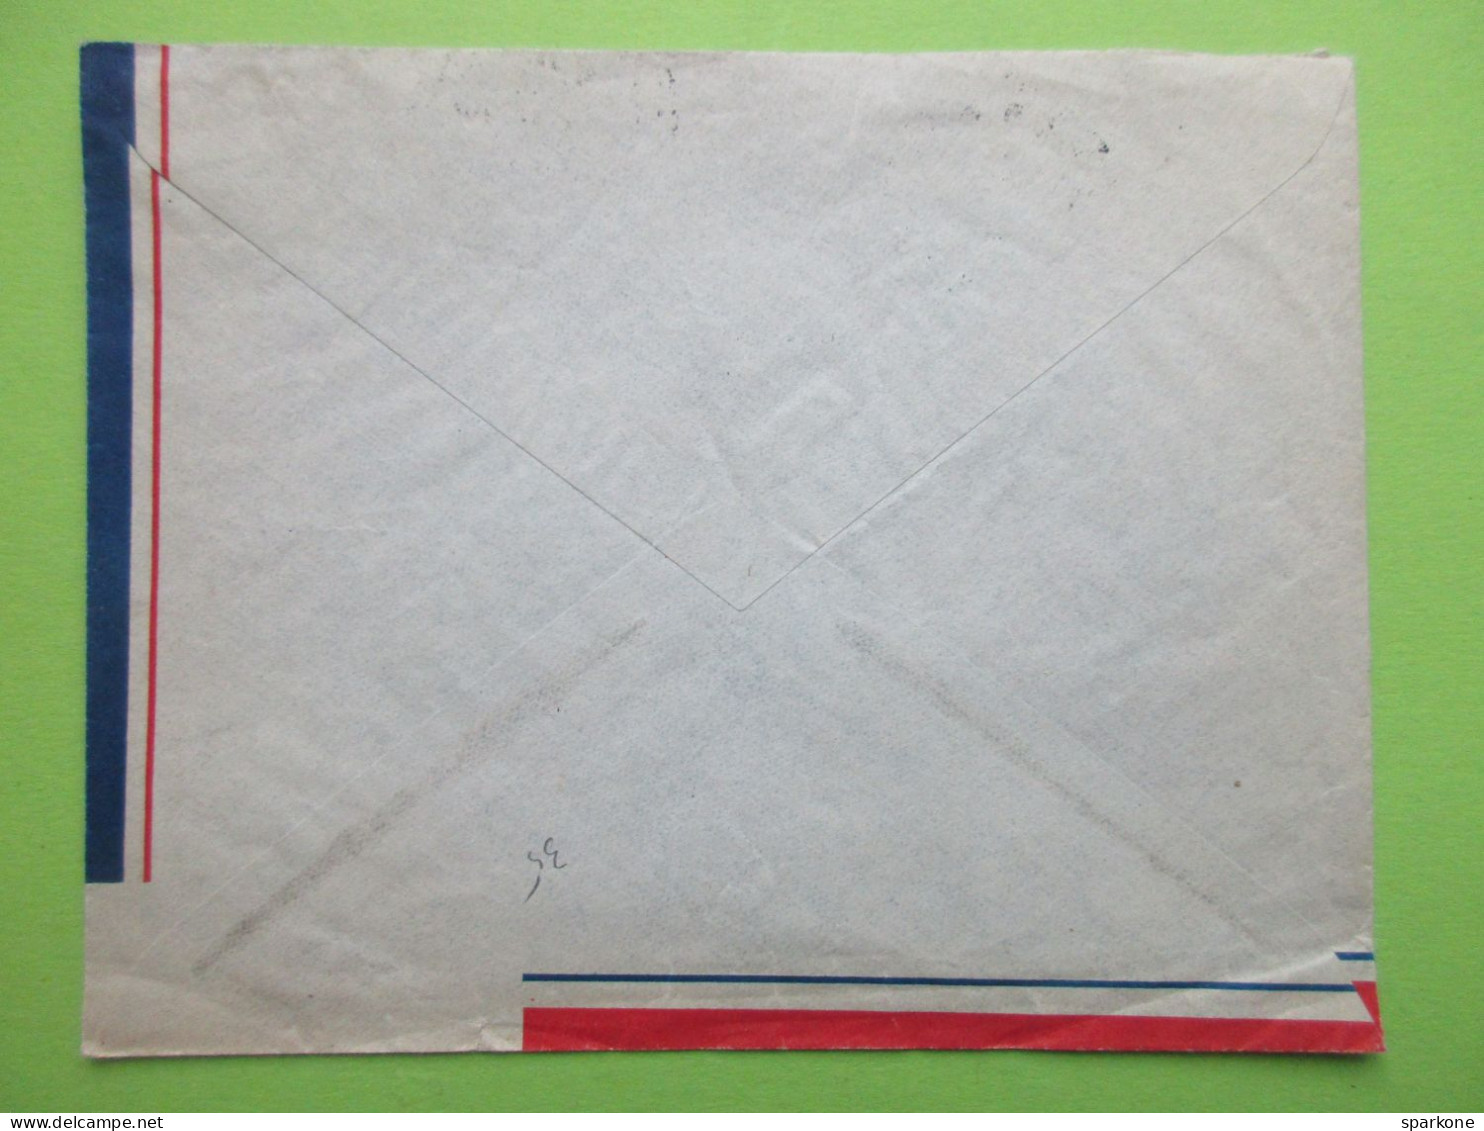 Marcophilie - Enveloppe - Poste Aérienne - Hang-Khong - Buu Chinh - Vietnam